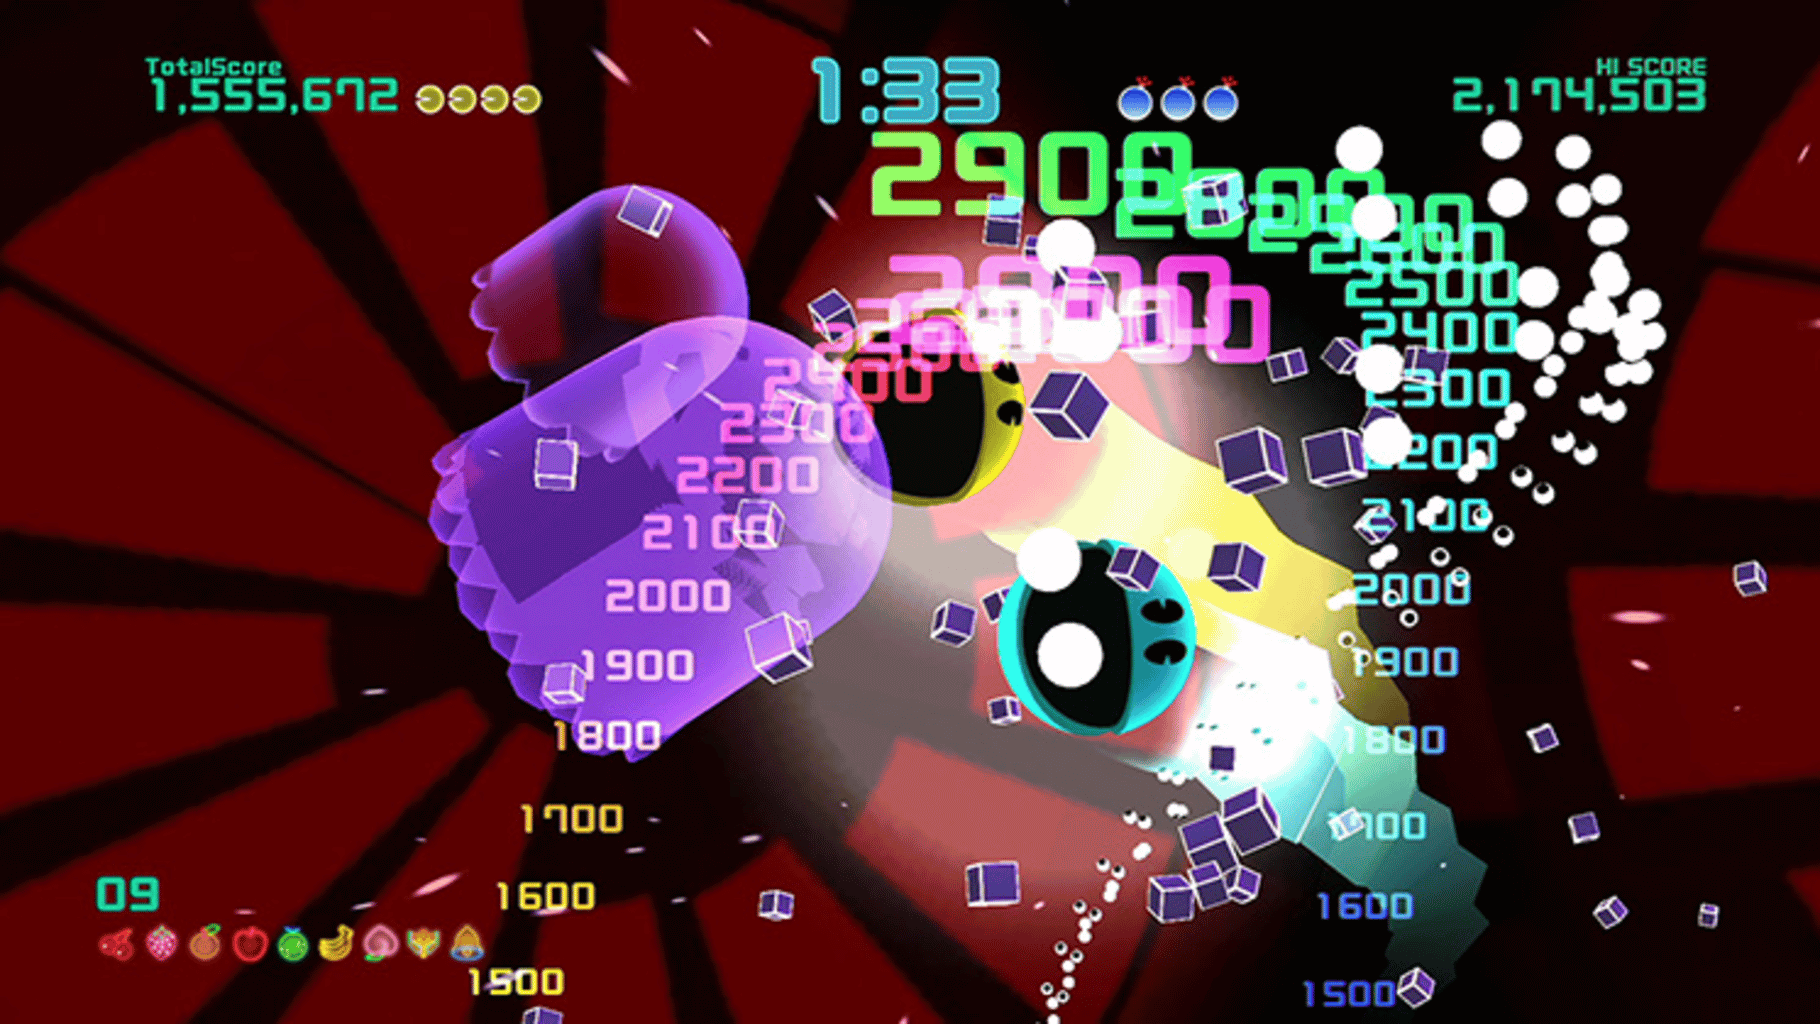 Pac-Man Championship Edition 2 Plus screenshot